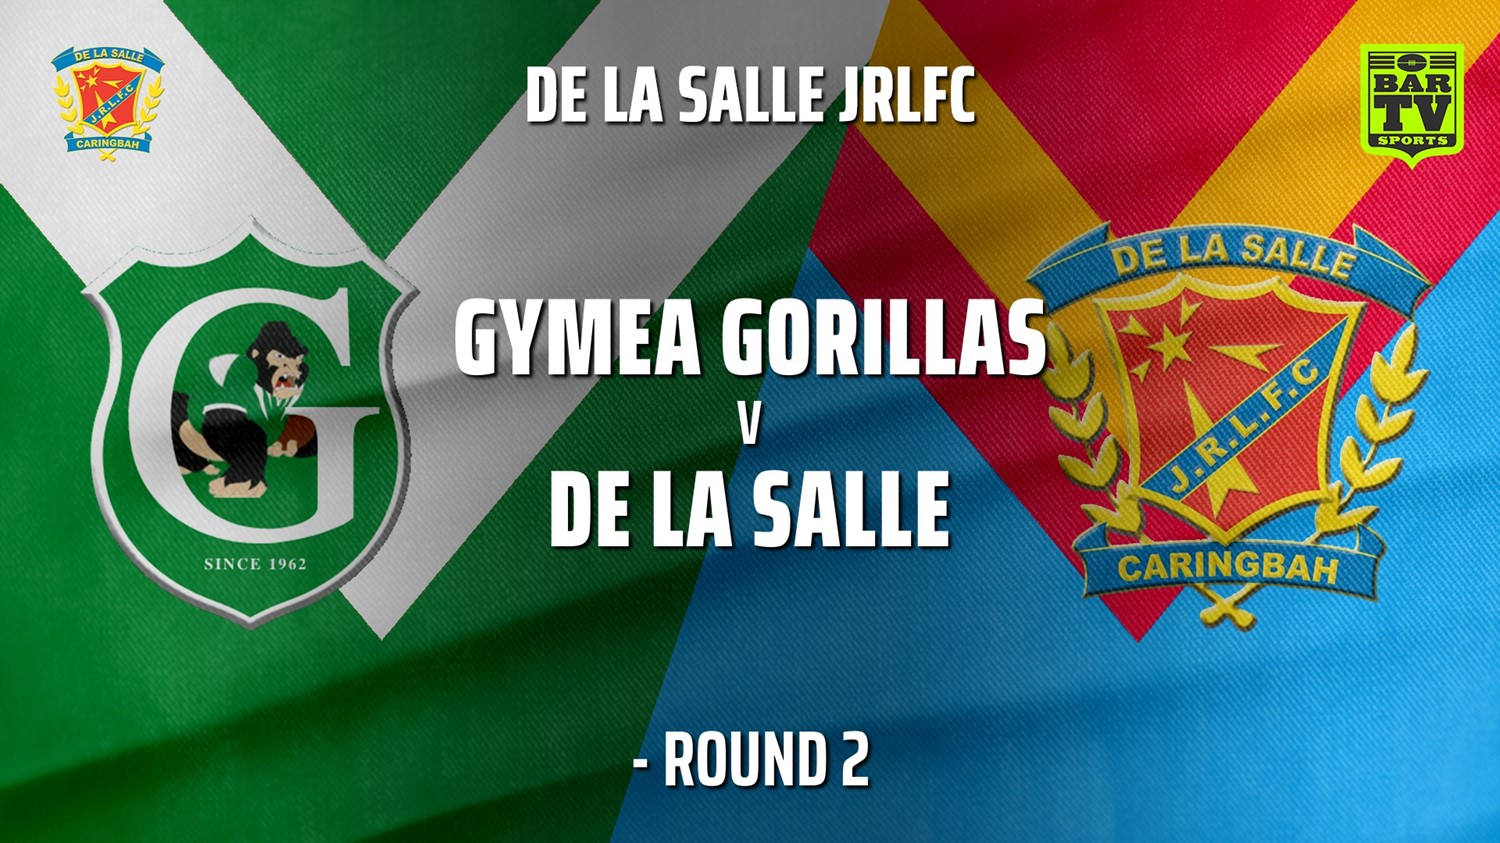 210509-De La Salle Southern Under 17 Silver Round 2 - Gymea Gorillas v De La Salle Slate Image